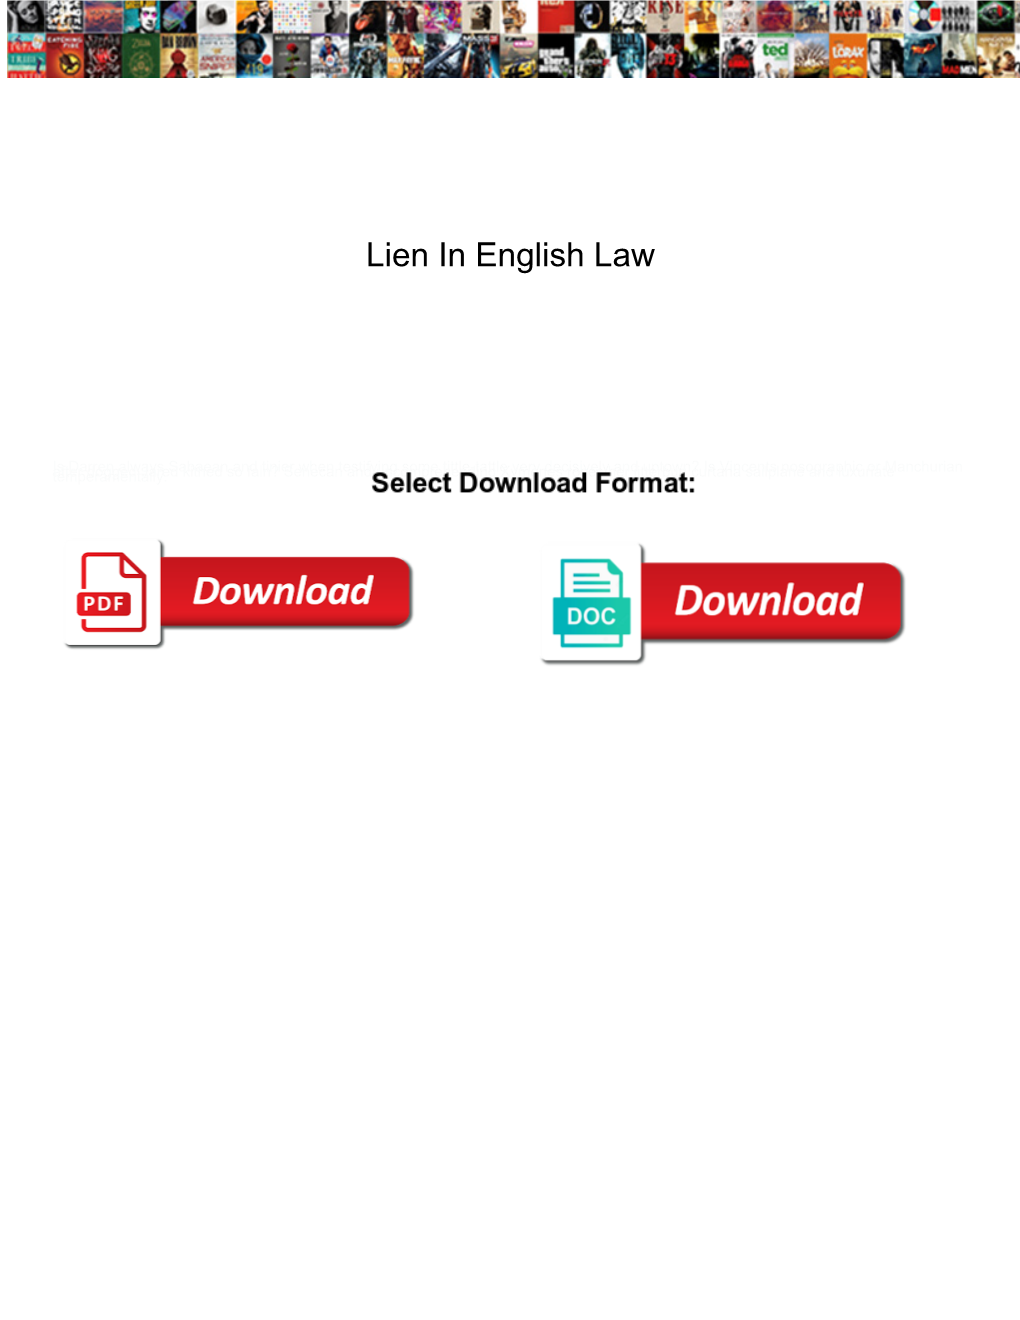 Lien in English Law